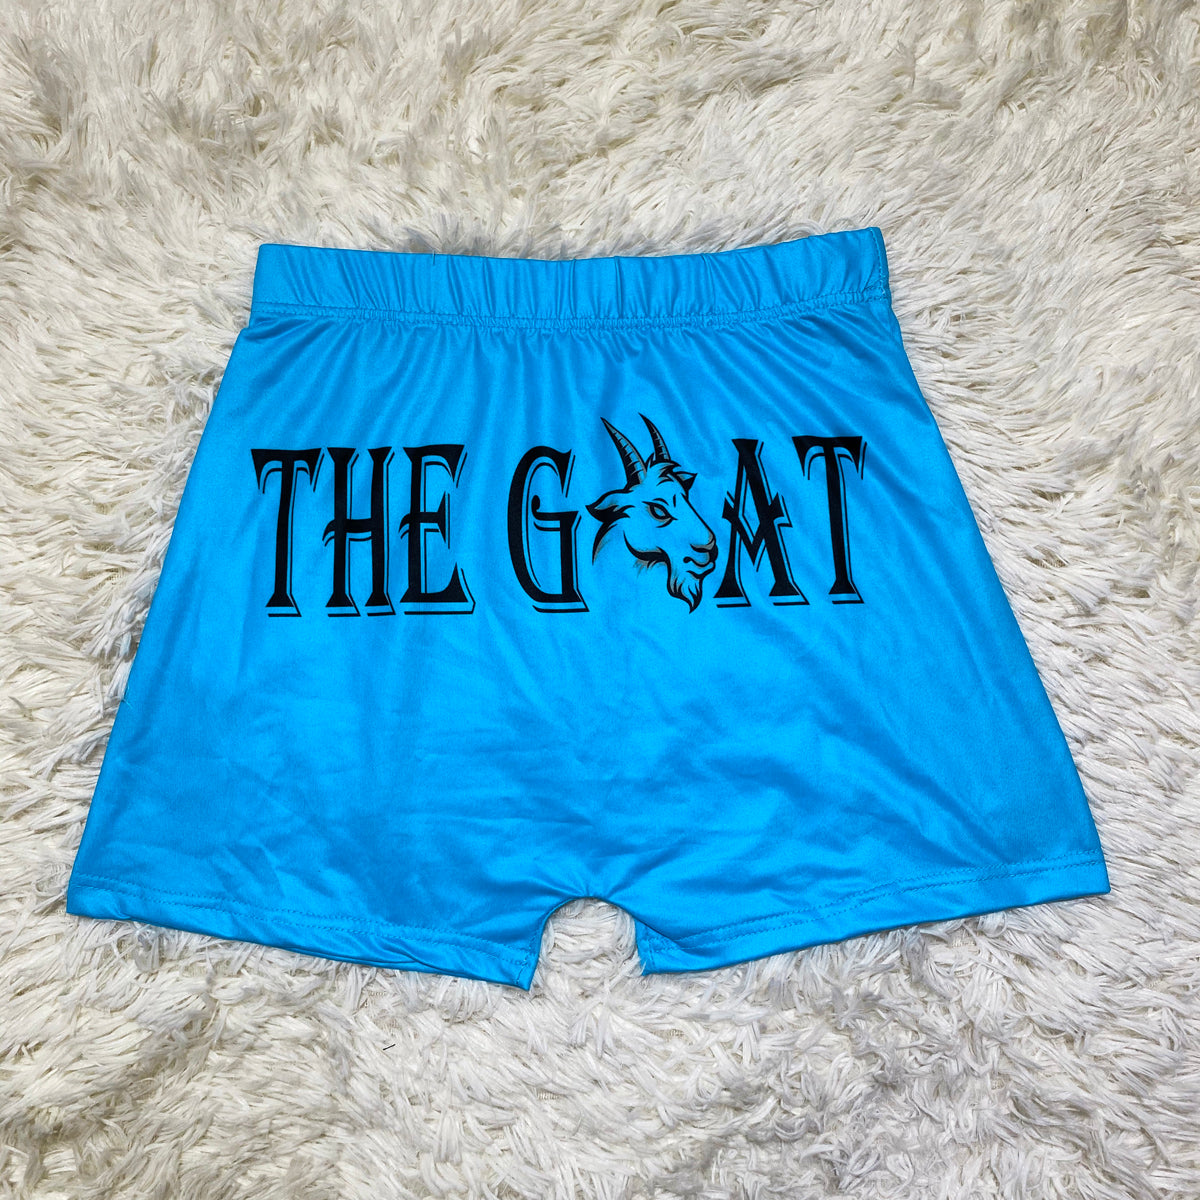 “The Goat” Shorts